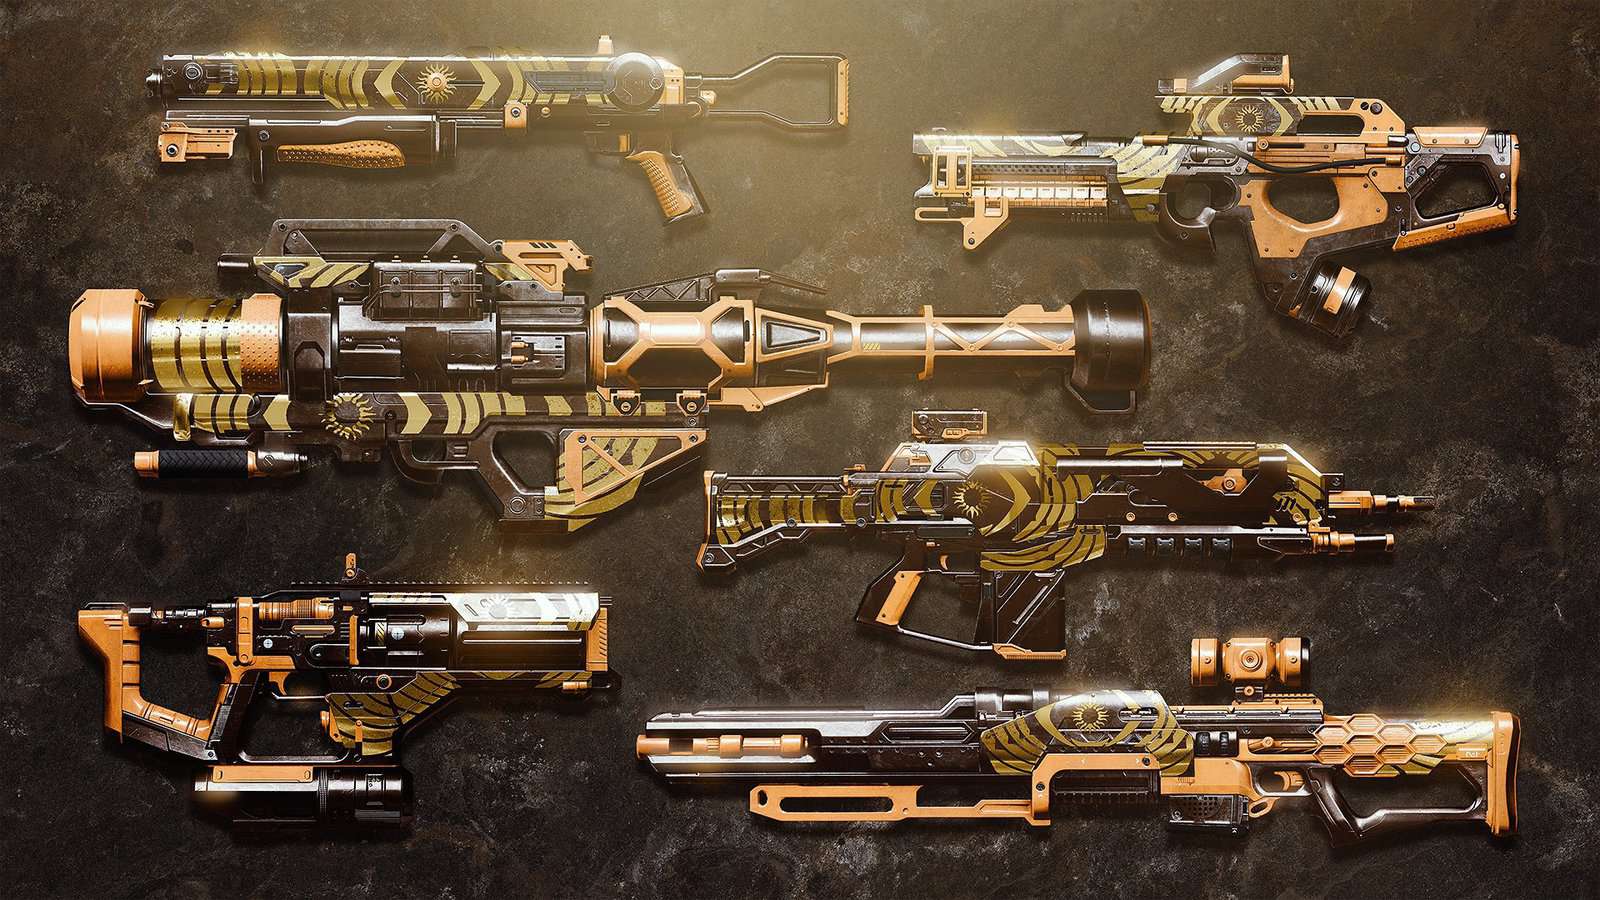 Ujian Osiris Weapons Destiny 2 900p